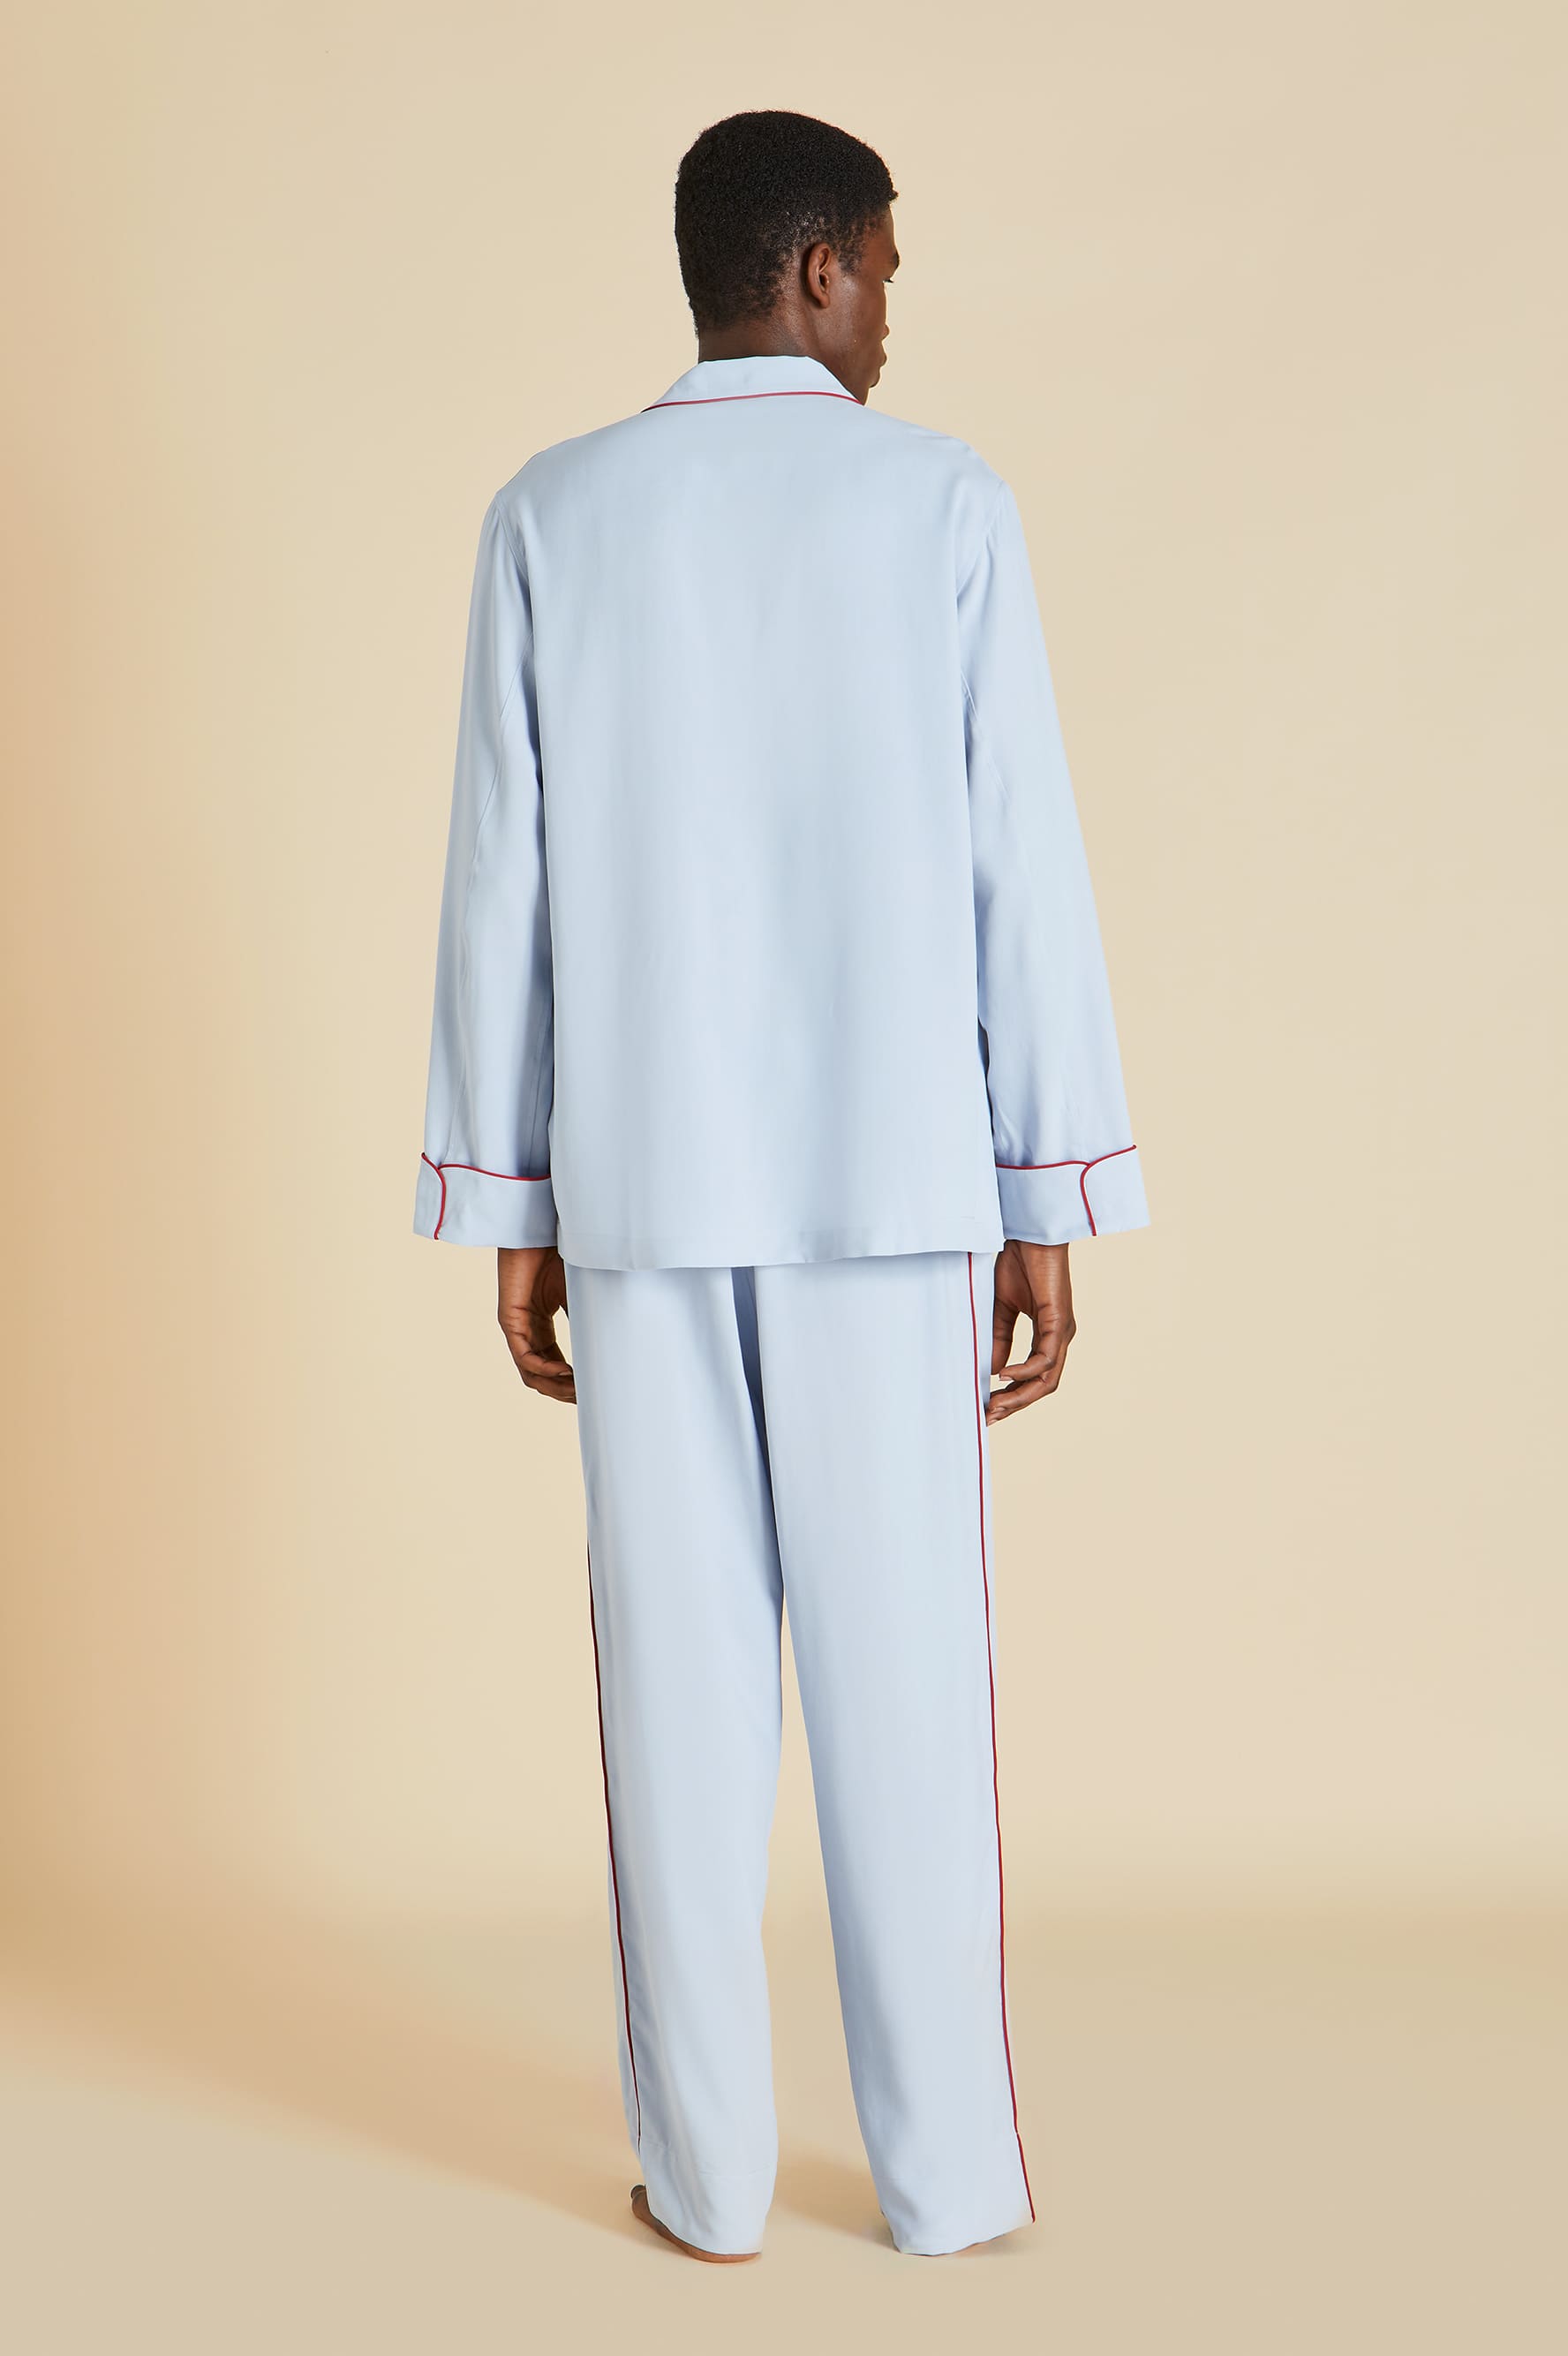 Laurent Cerulean Blue Pajamas in Sandwashed Silk